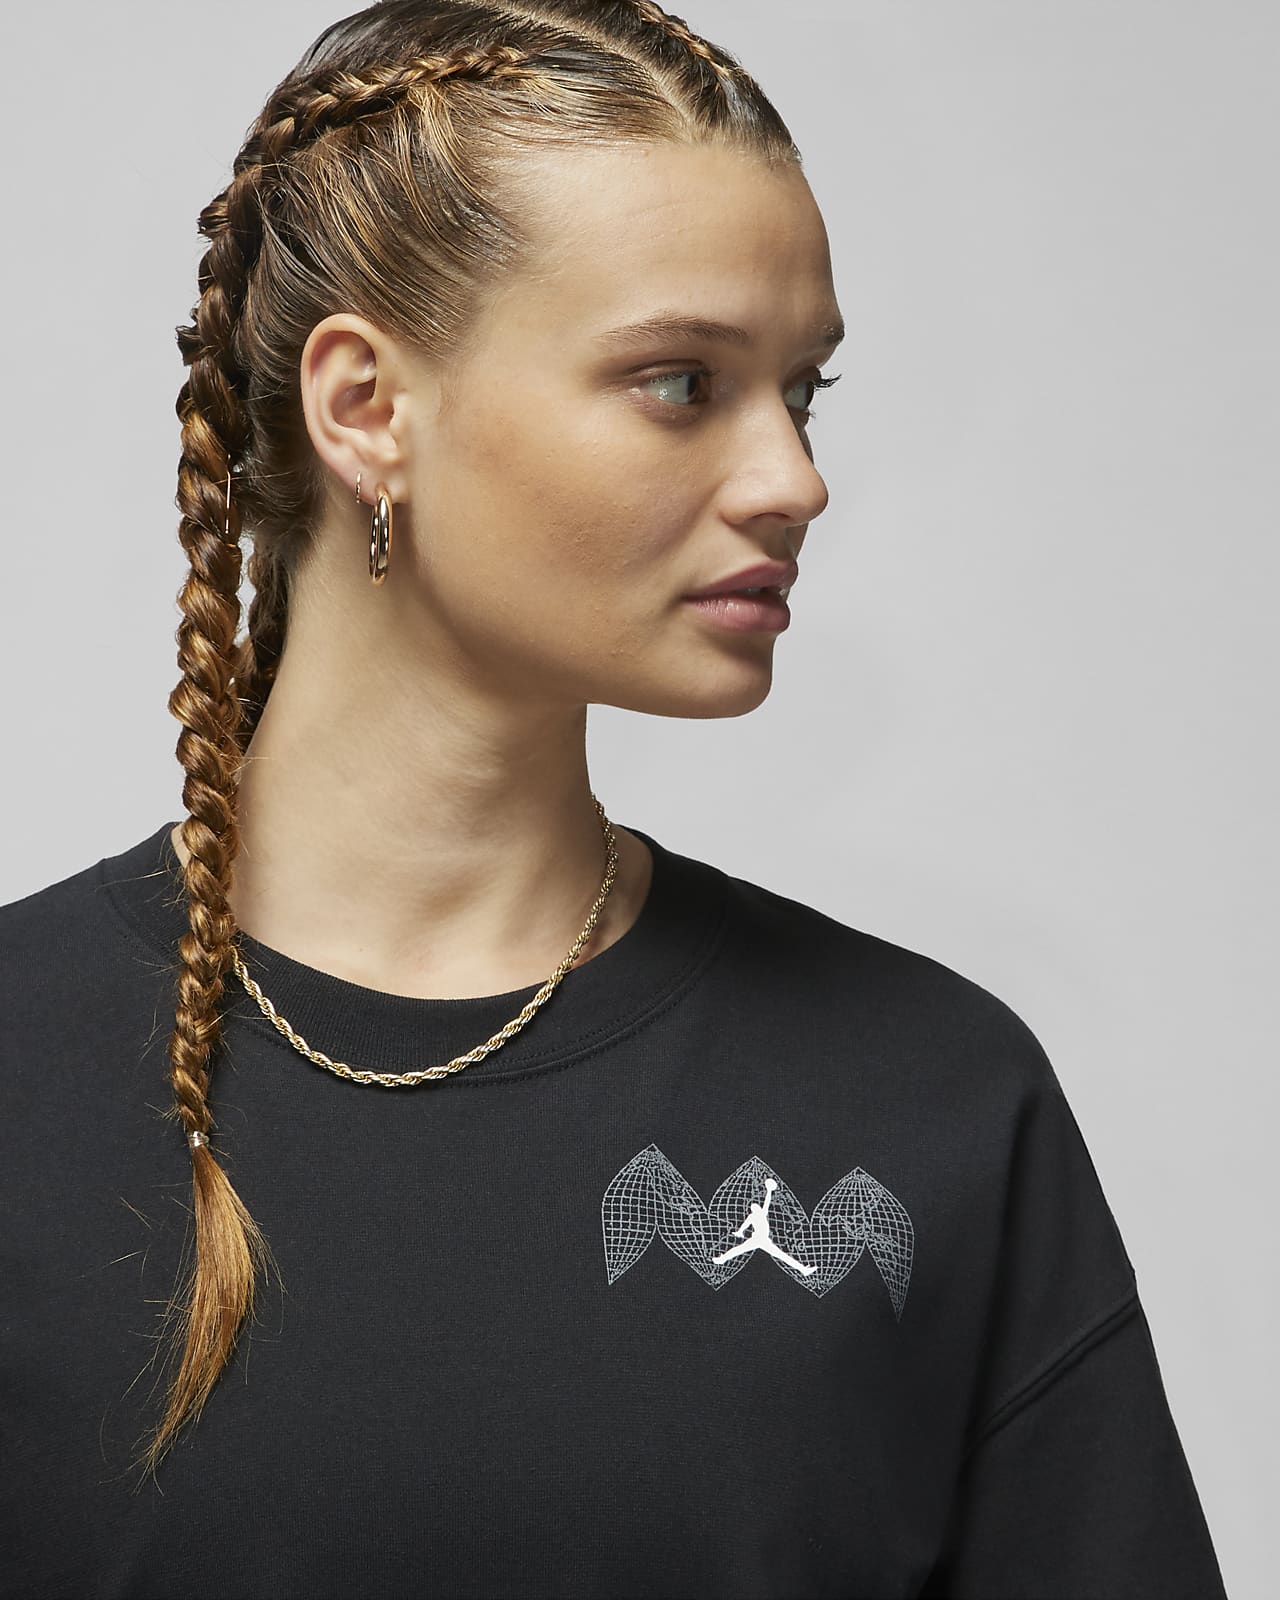 Jordan (Her)itage Women's Oversized Graphic T-Shirt. Nike AE